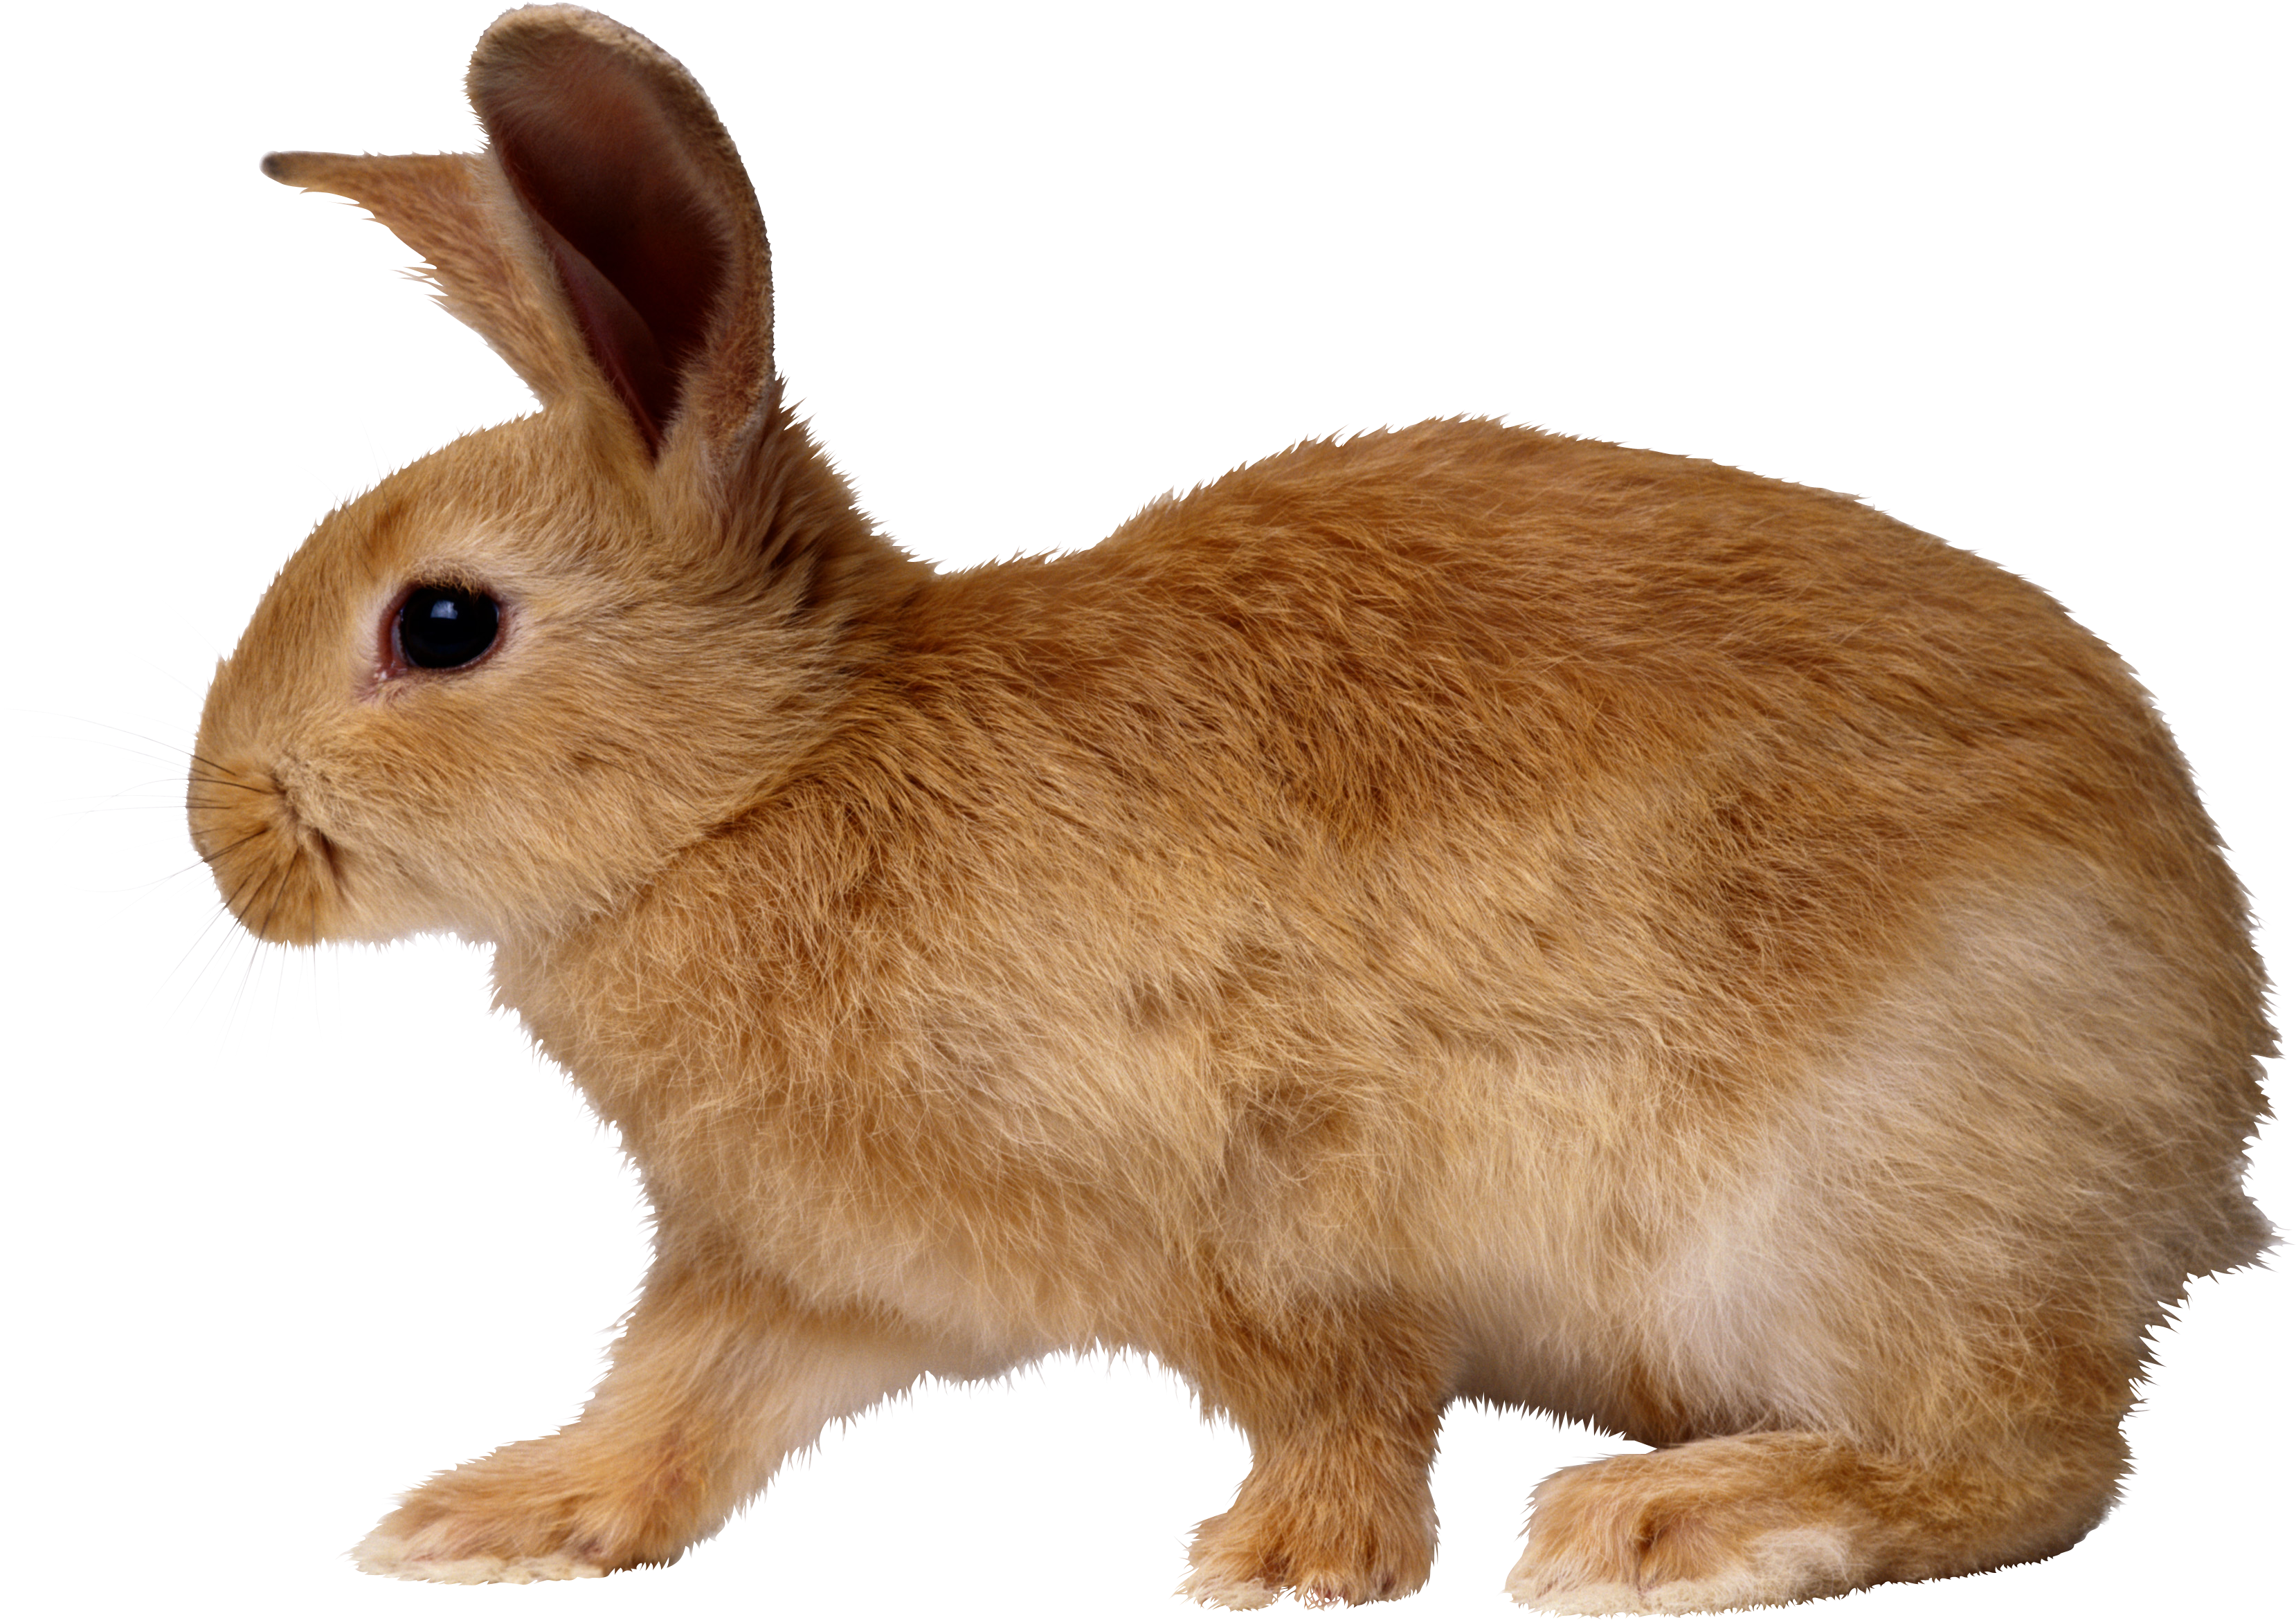 Bunny Rabbit Png